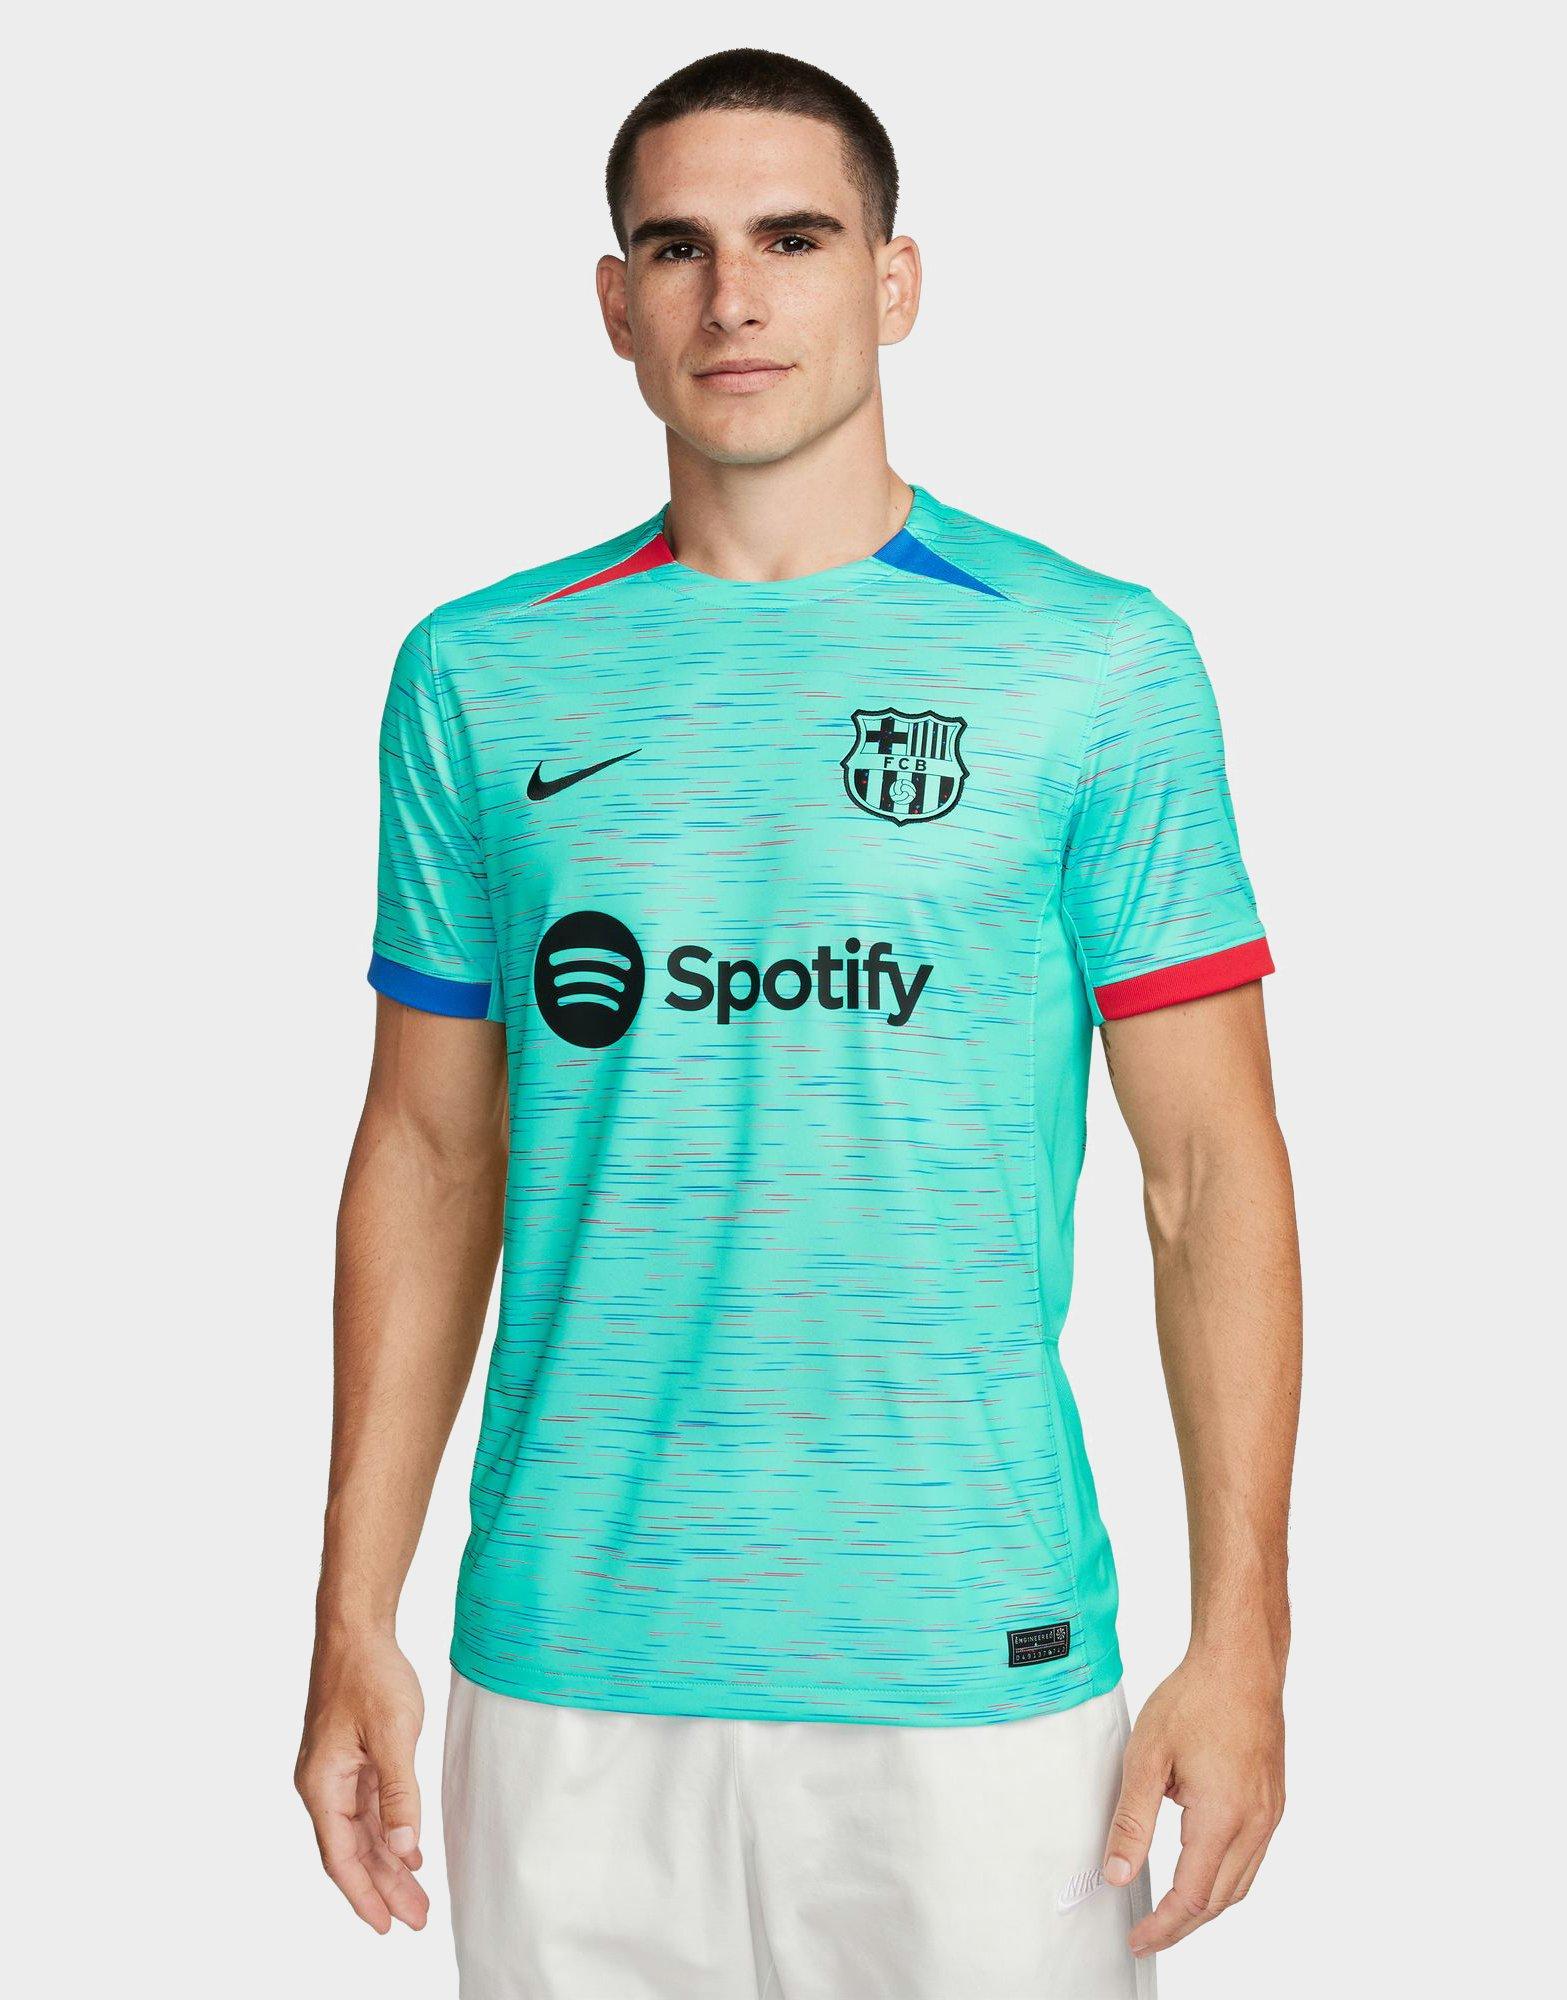 nike brasil jersey shirt brazil blue size M medium 10/11 away kit